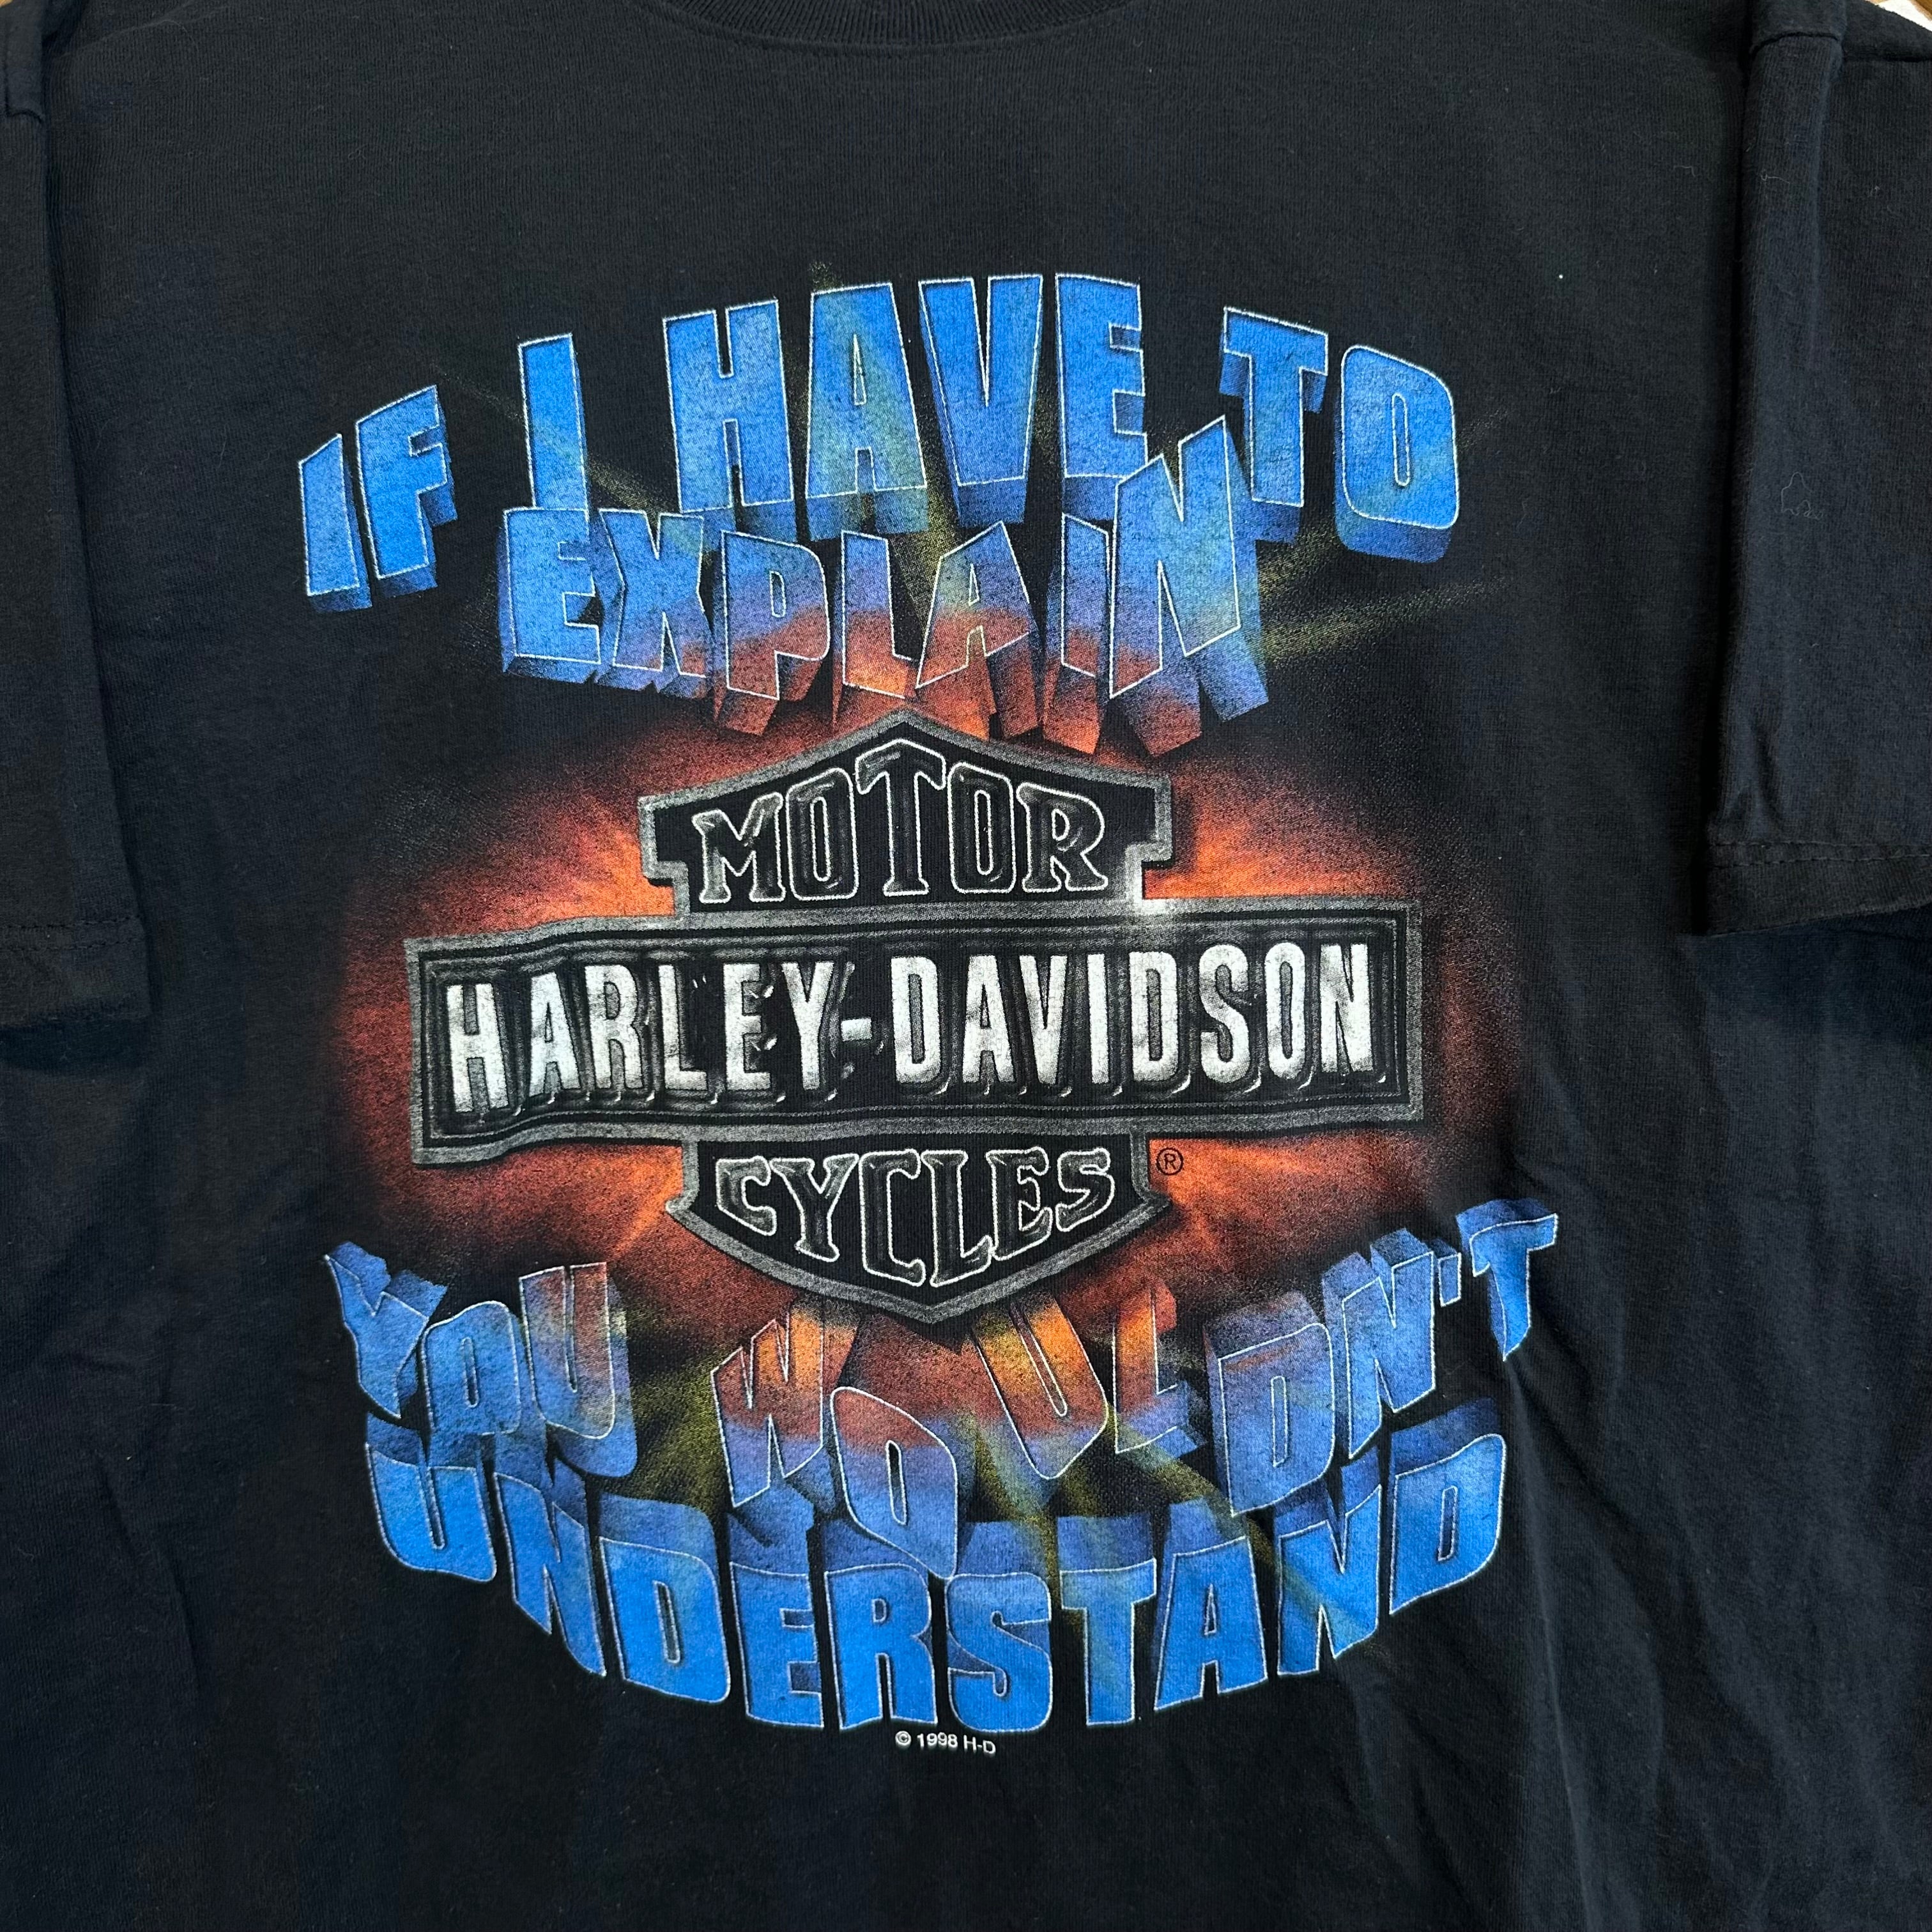 Harley Davidson If I Have to Explain Oslo, Norway T-Shirt